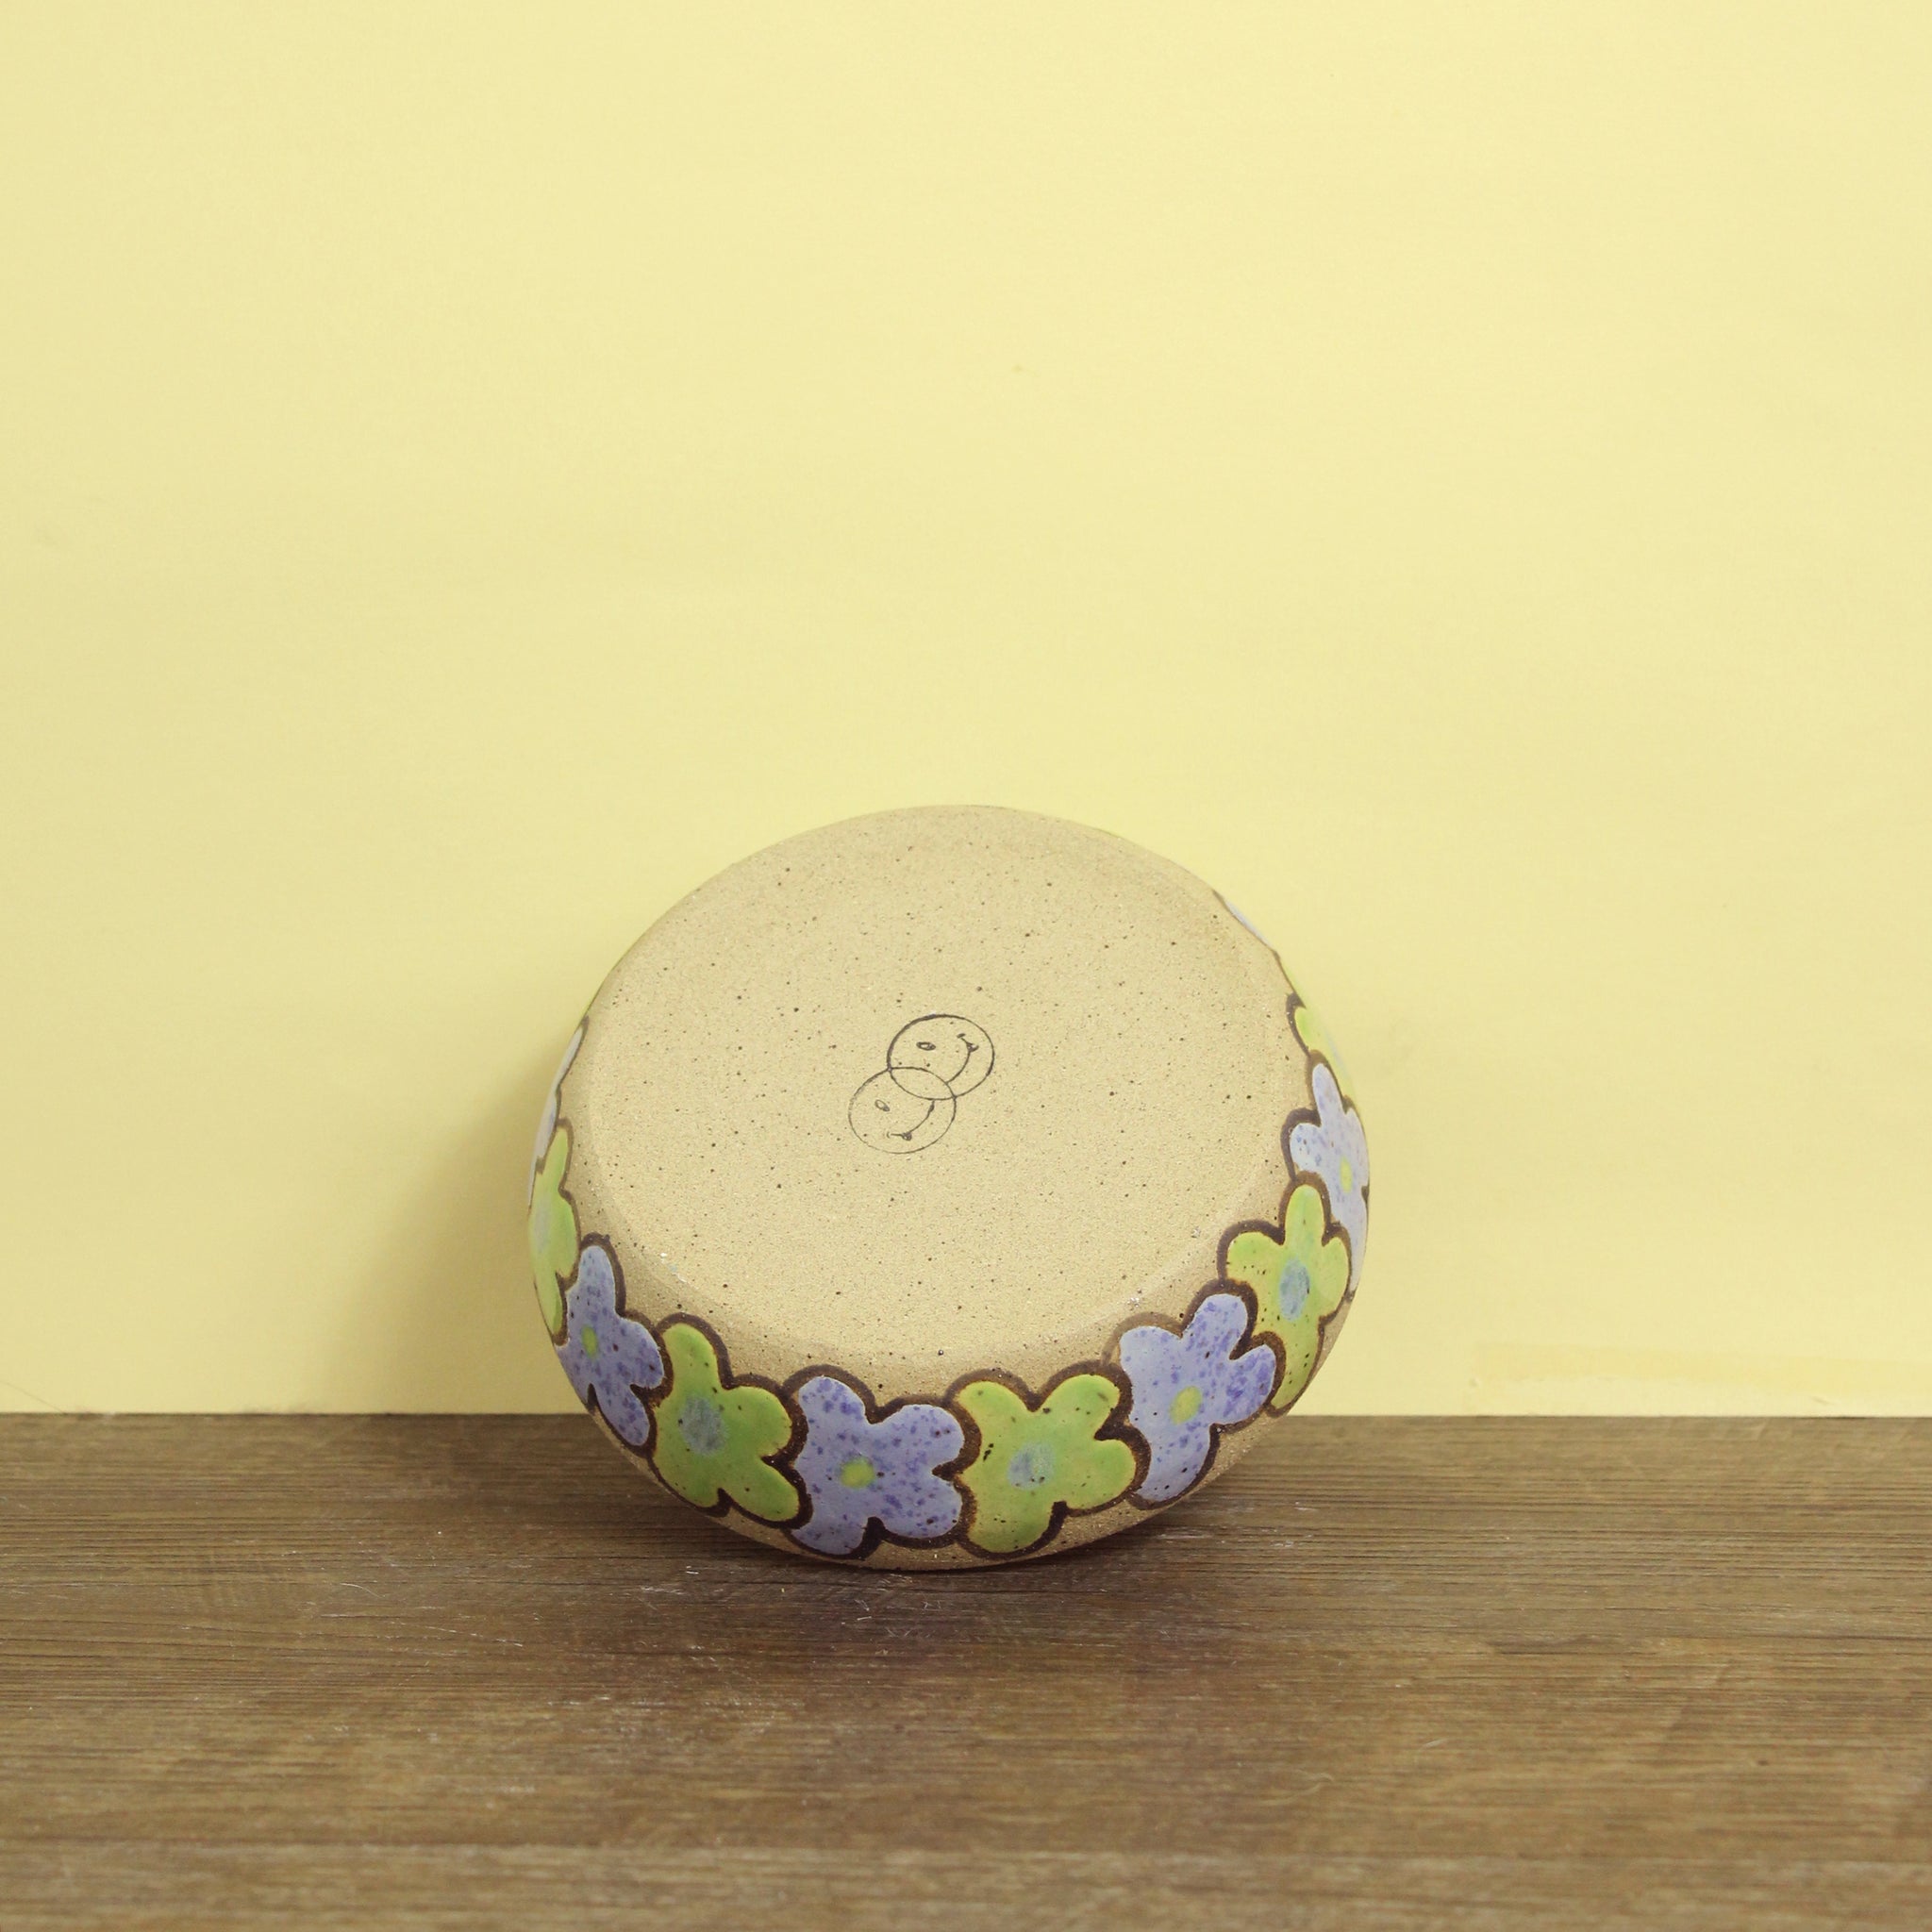 Glazed Stoneware Kitty Bowl/Catch All Dish with Flower Pattern